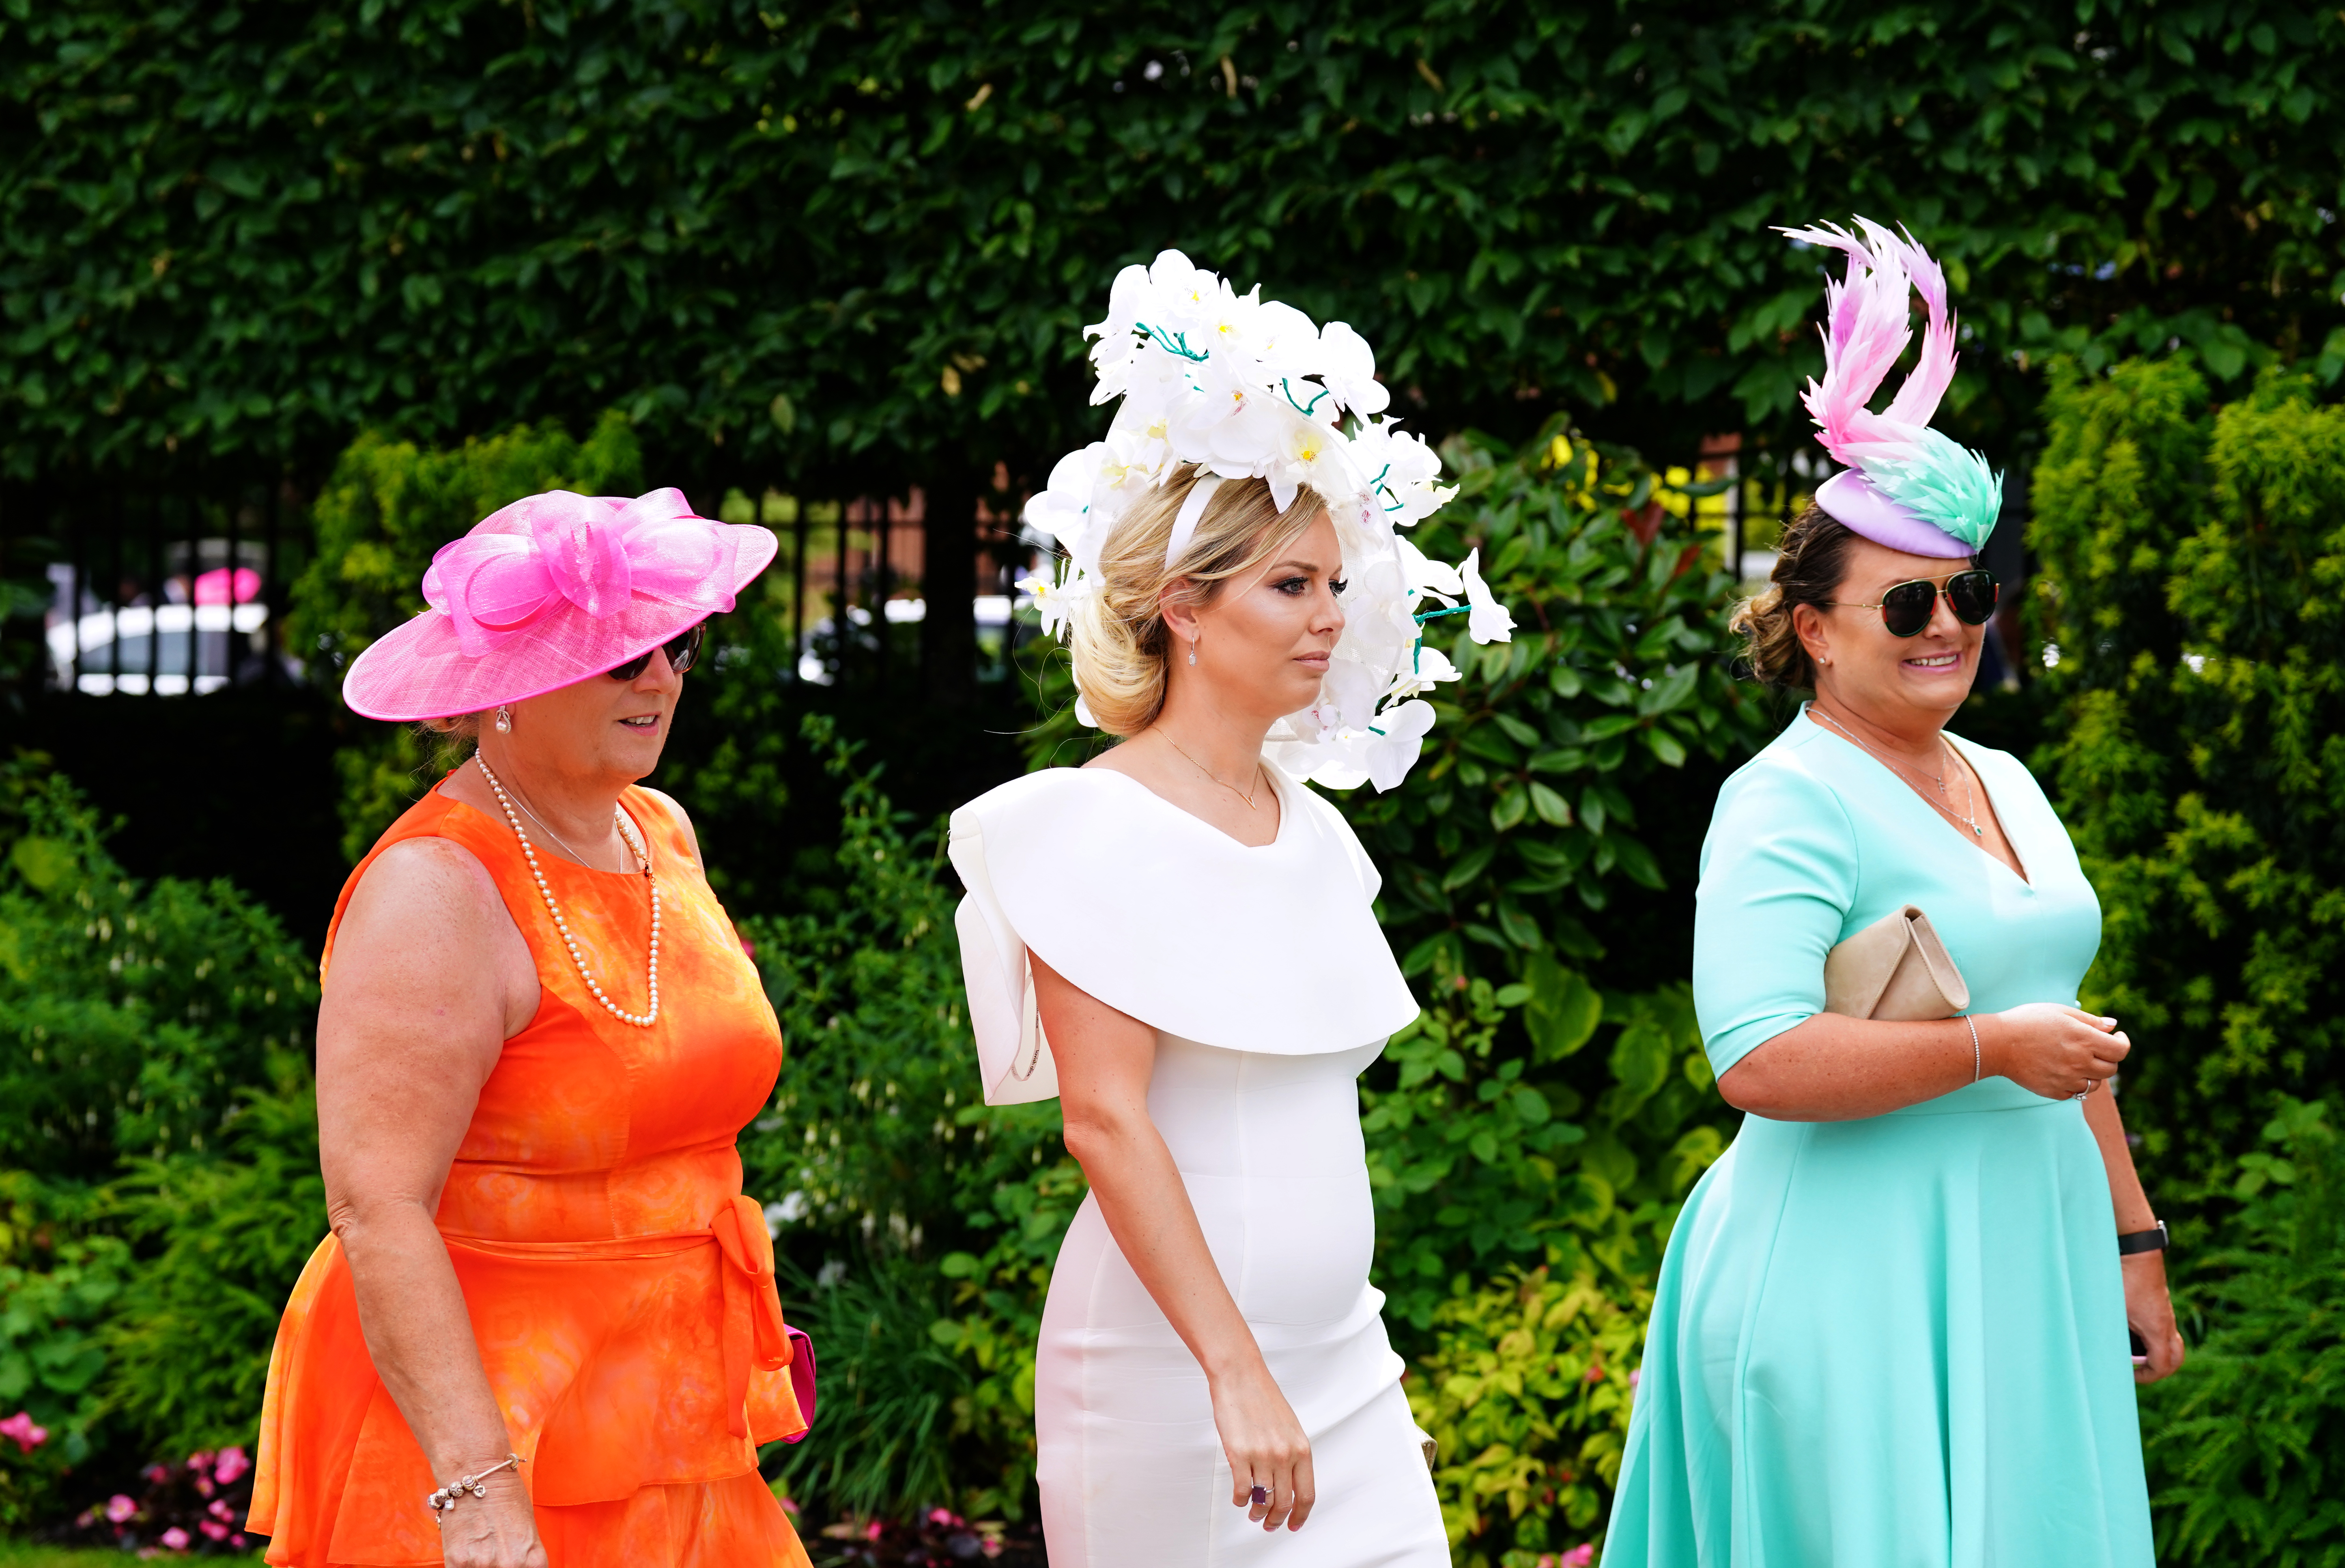 Fabulous fashion turning heads at Royal Ascot's Ladies Day